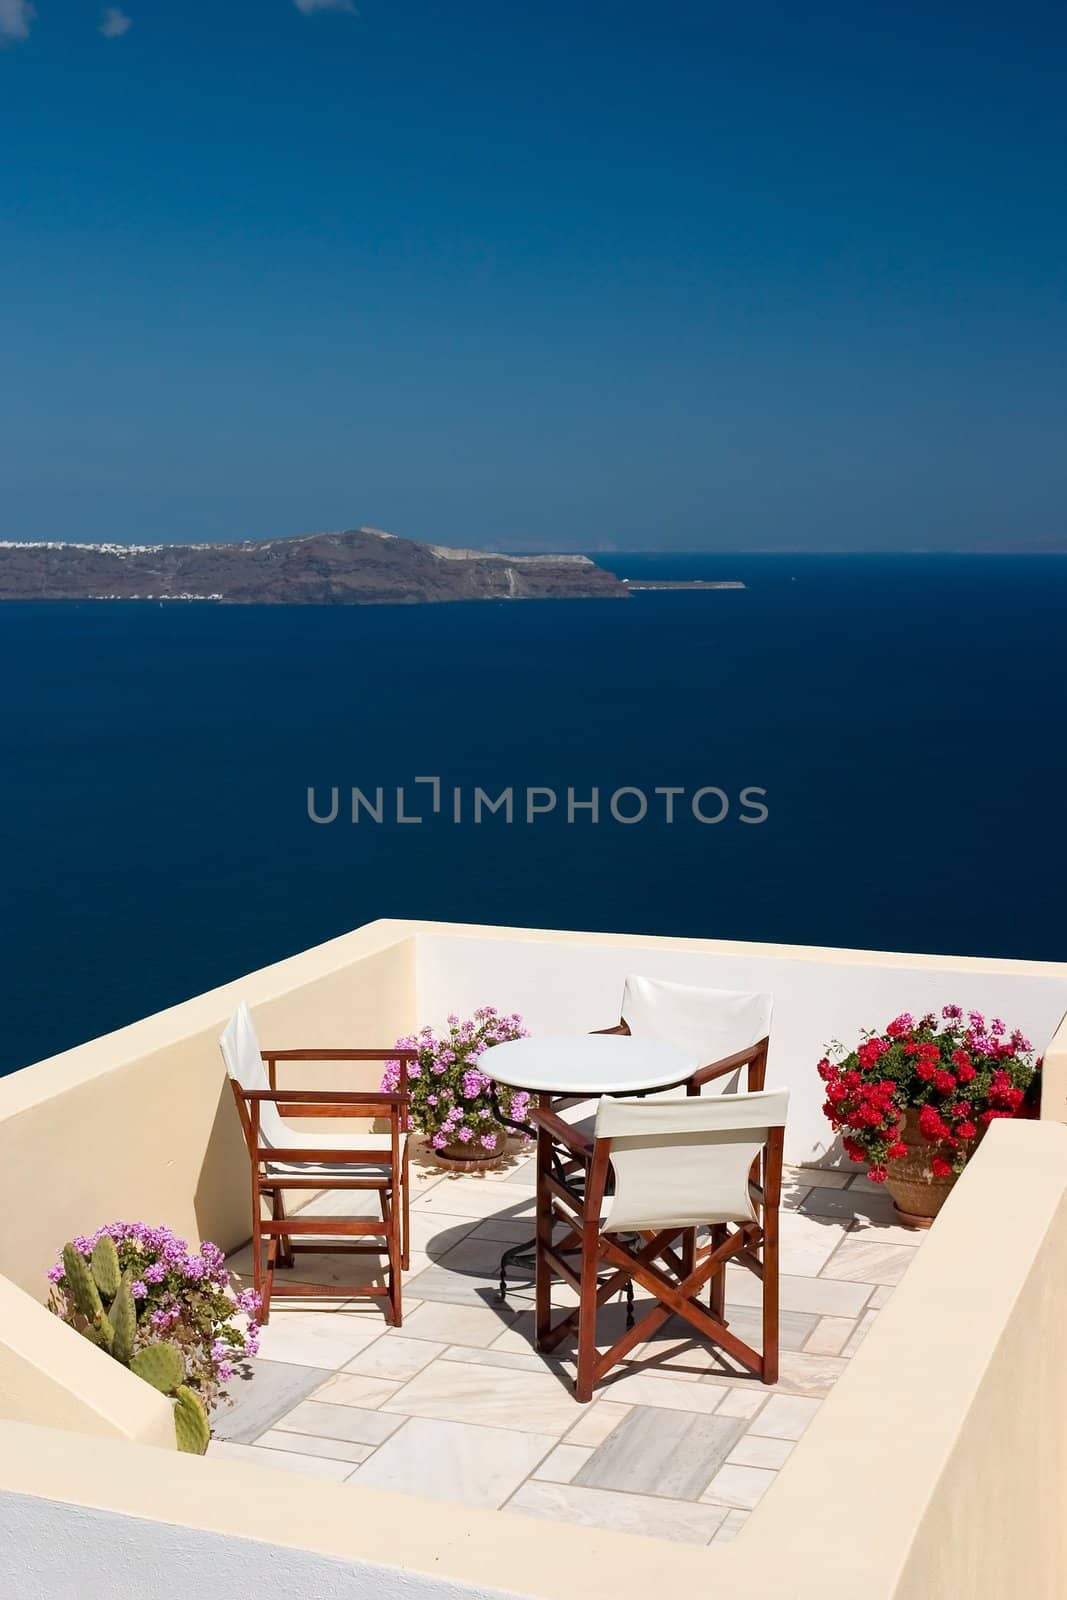 Beautiful view from balcony on the Santorini island